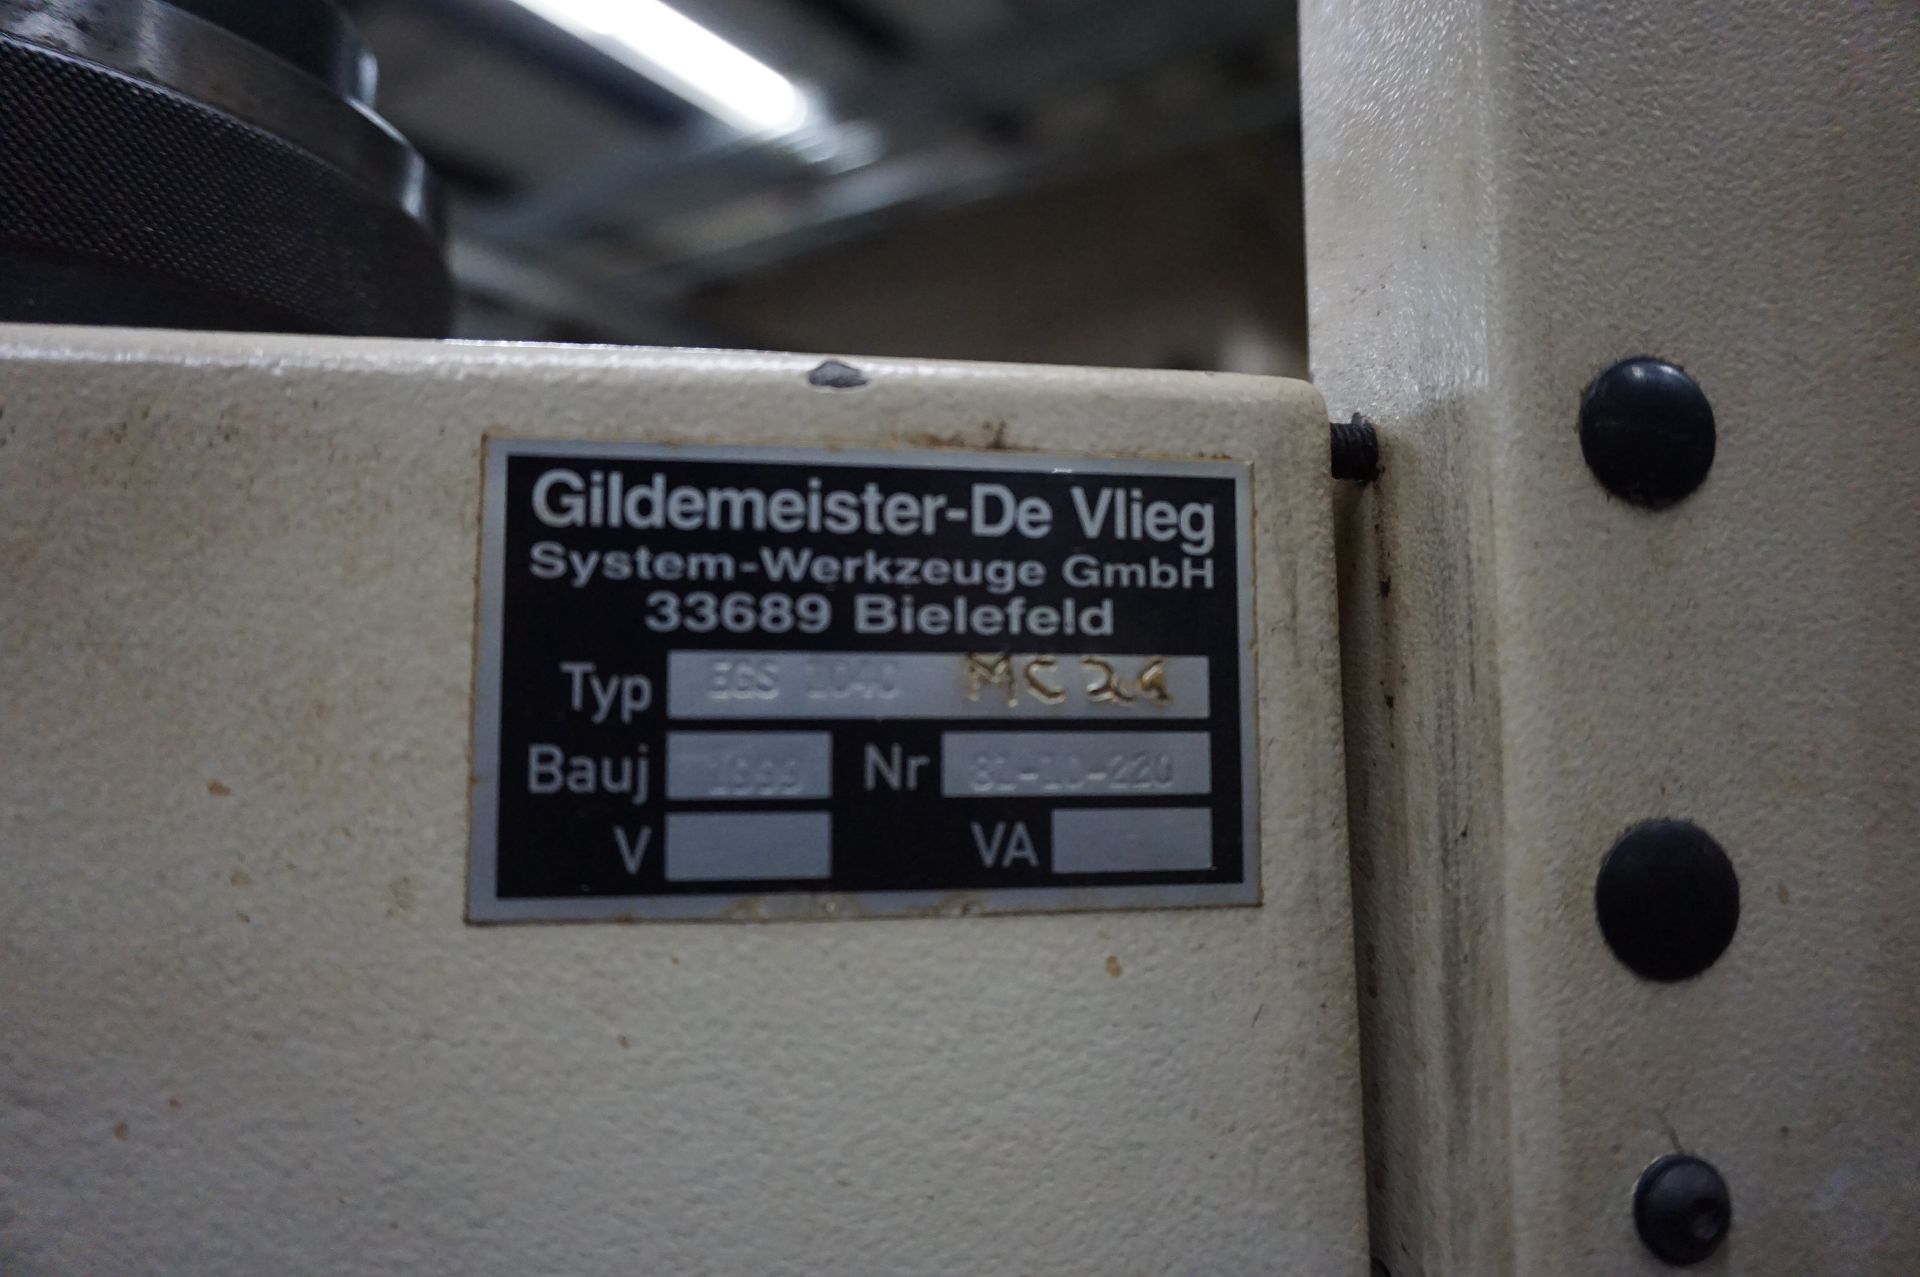 LOT TO INCLUDE: (1) 1999 GILDEMEISTER-DE VLIEG MICROSET TOOL PRESETTING MACHINE MODEL EGS 1040, S/ - Image 2 of 6